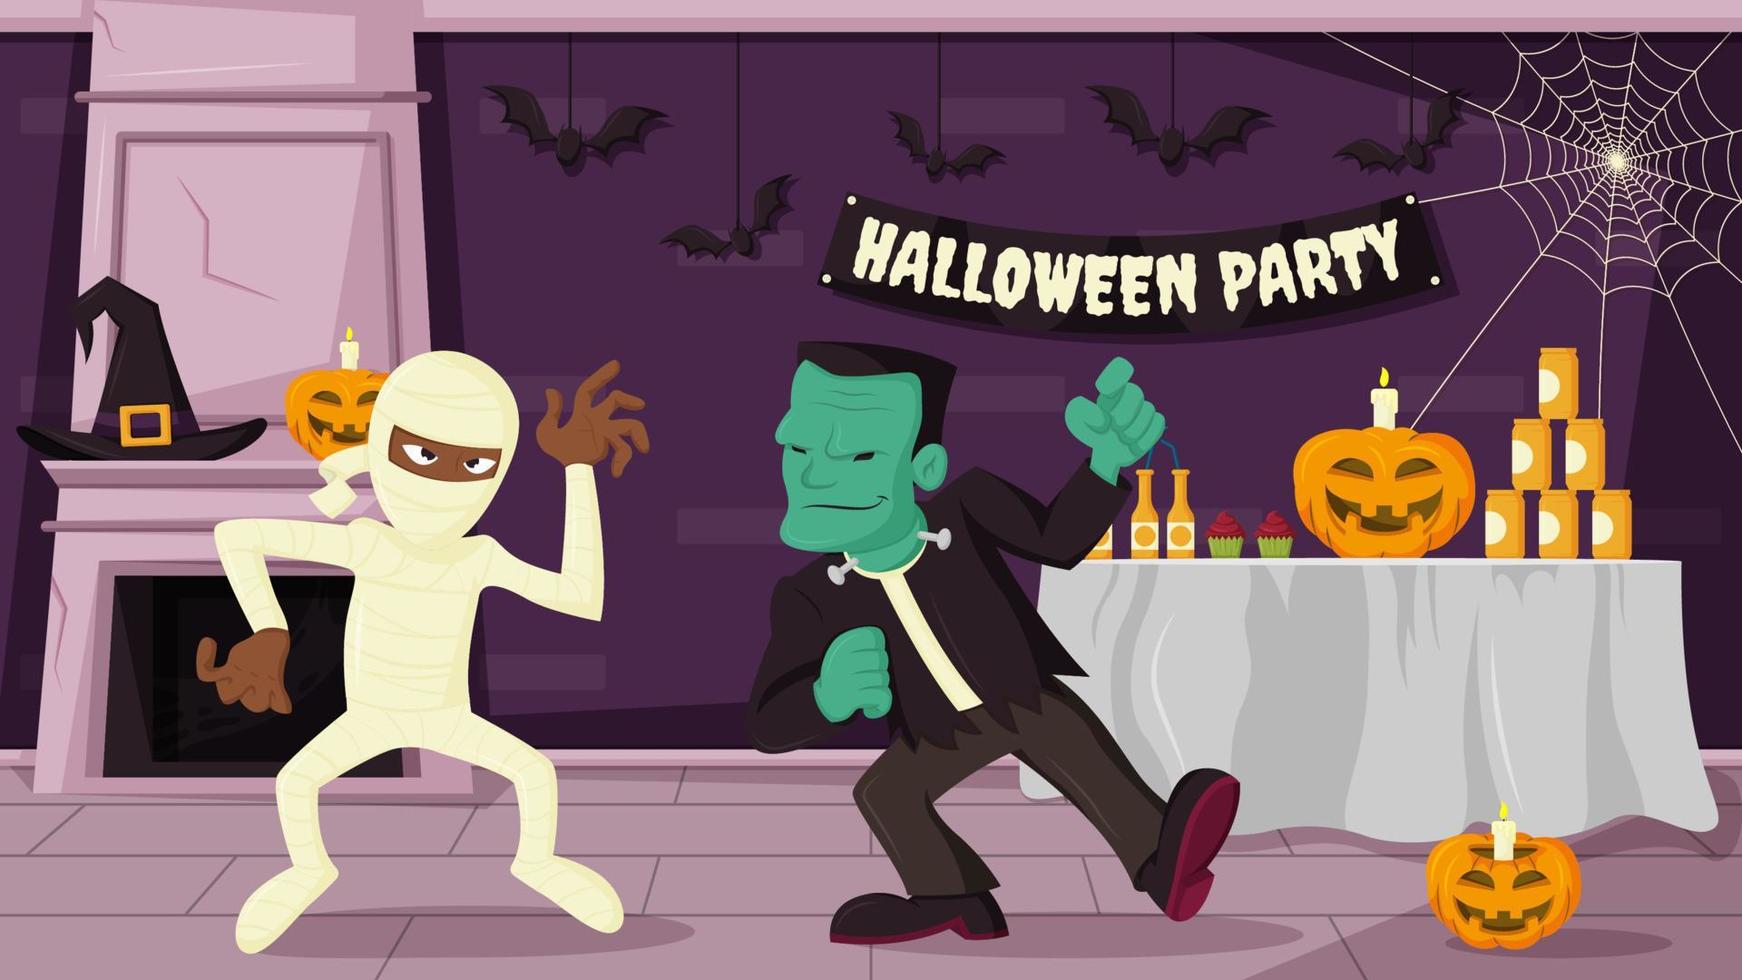 Dancing Monsters At Halloween Party vector